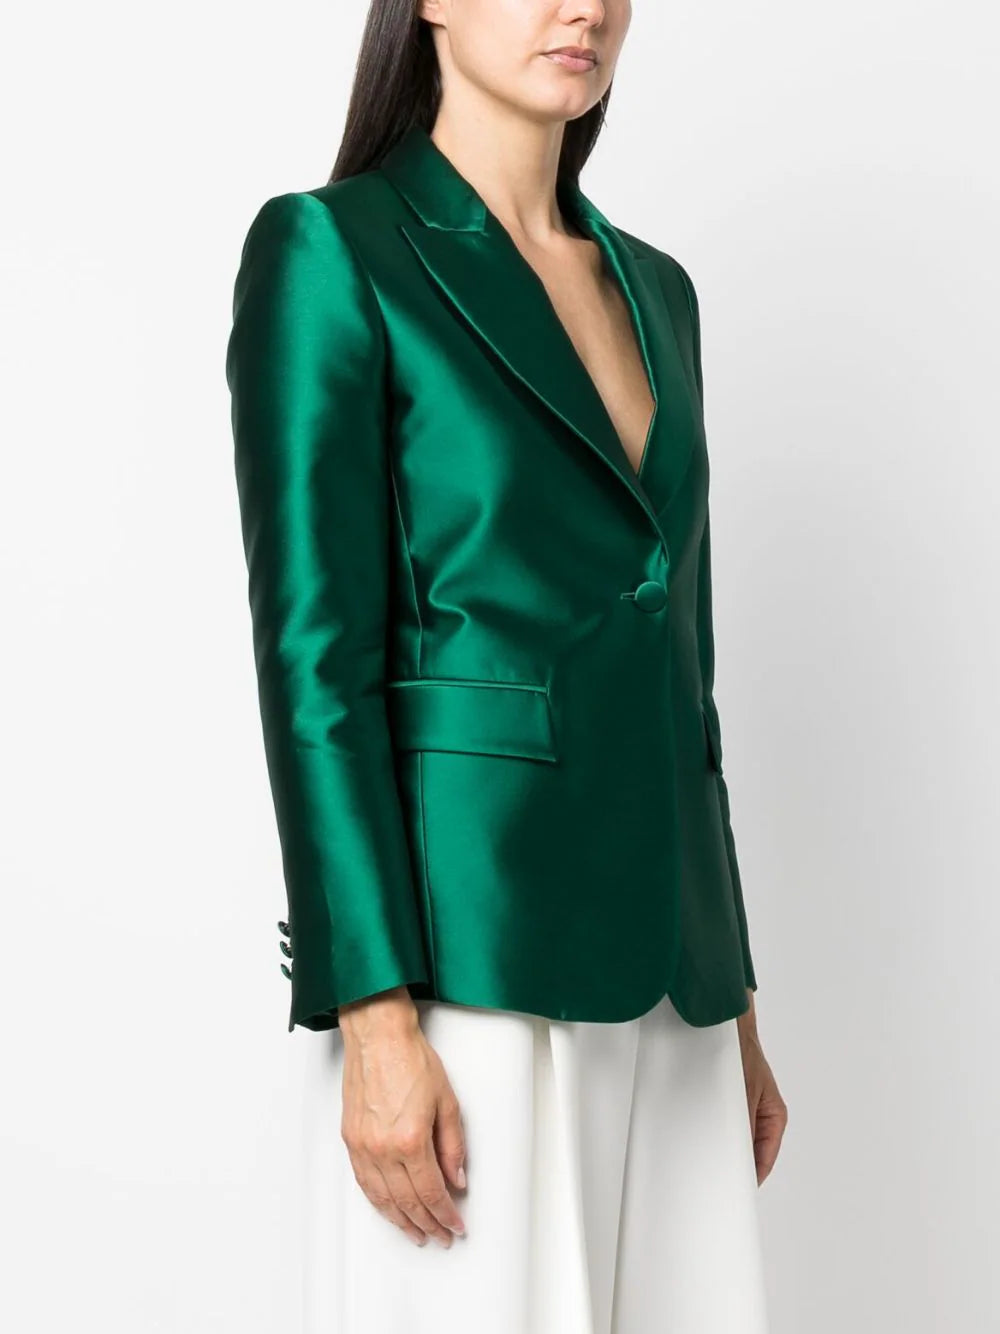 Long-sleeved Satin Single-breasted Blazer - Emerald Green